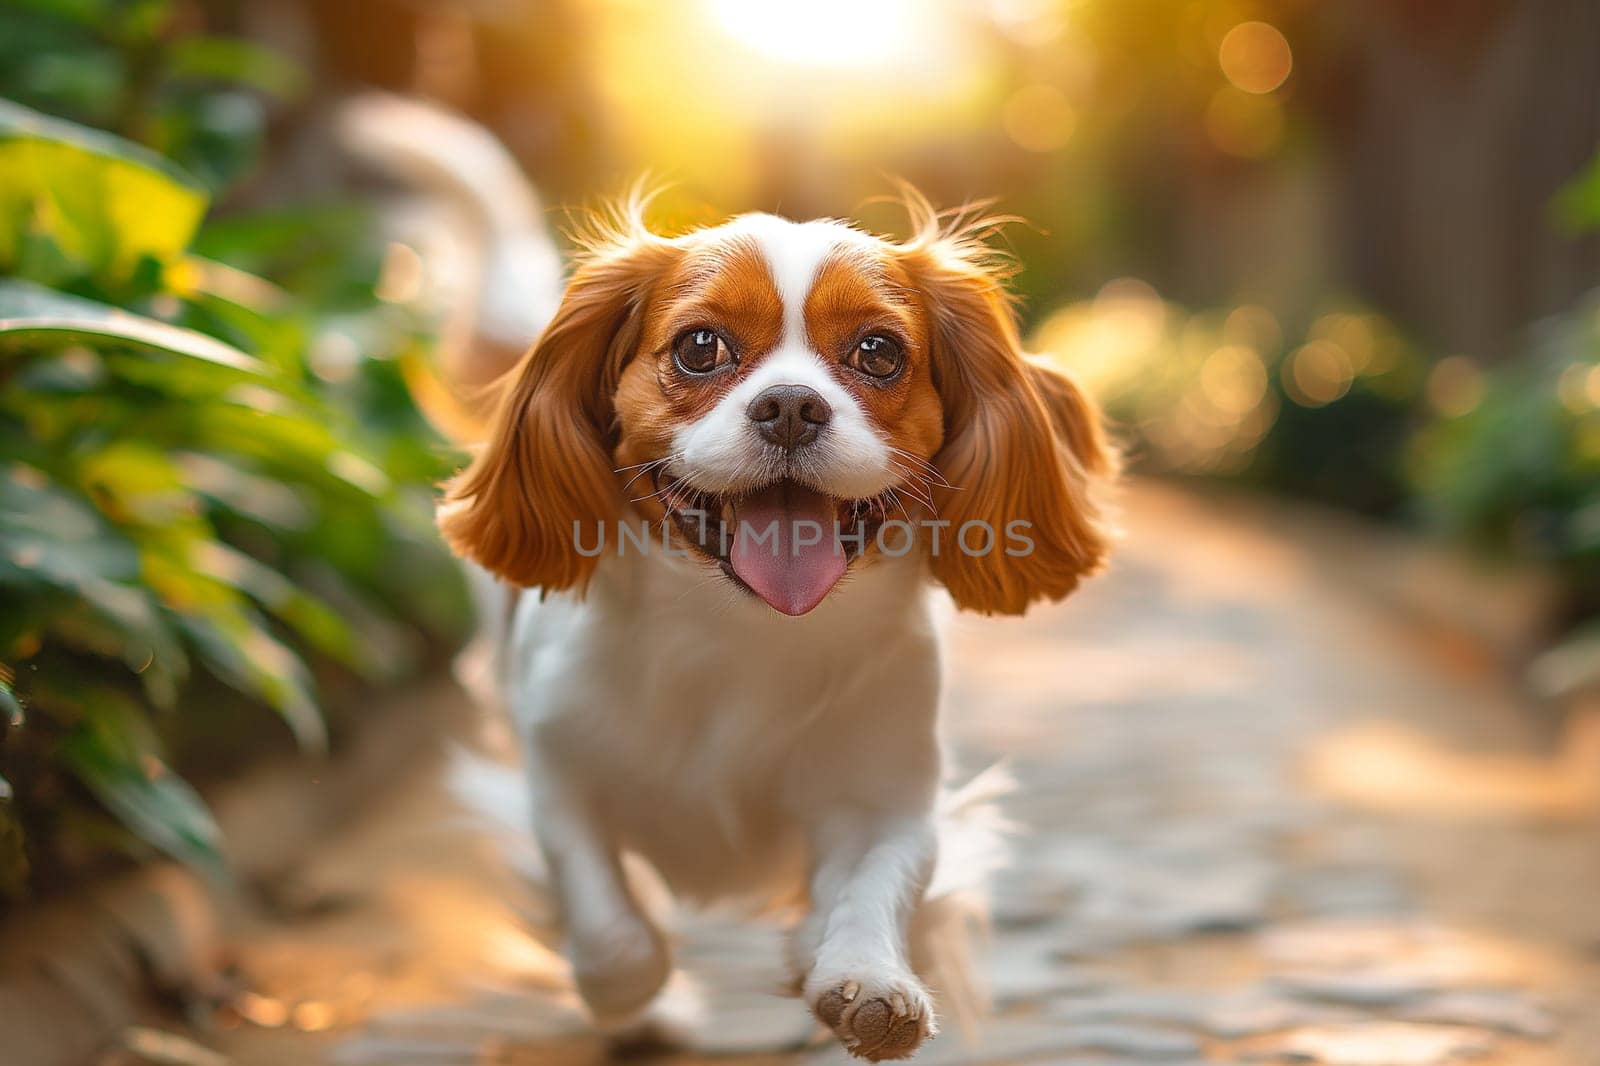 Happy puppy dog Cavalier Spaniel running outdoors in sunlight on a cobblestone path joyful